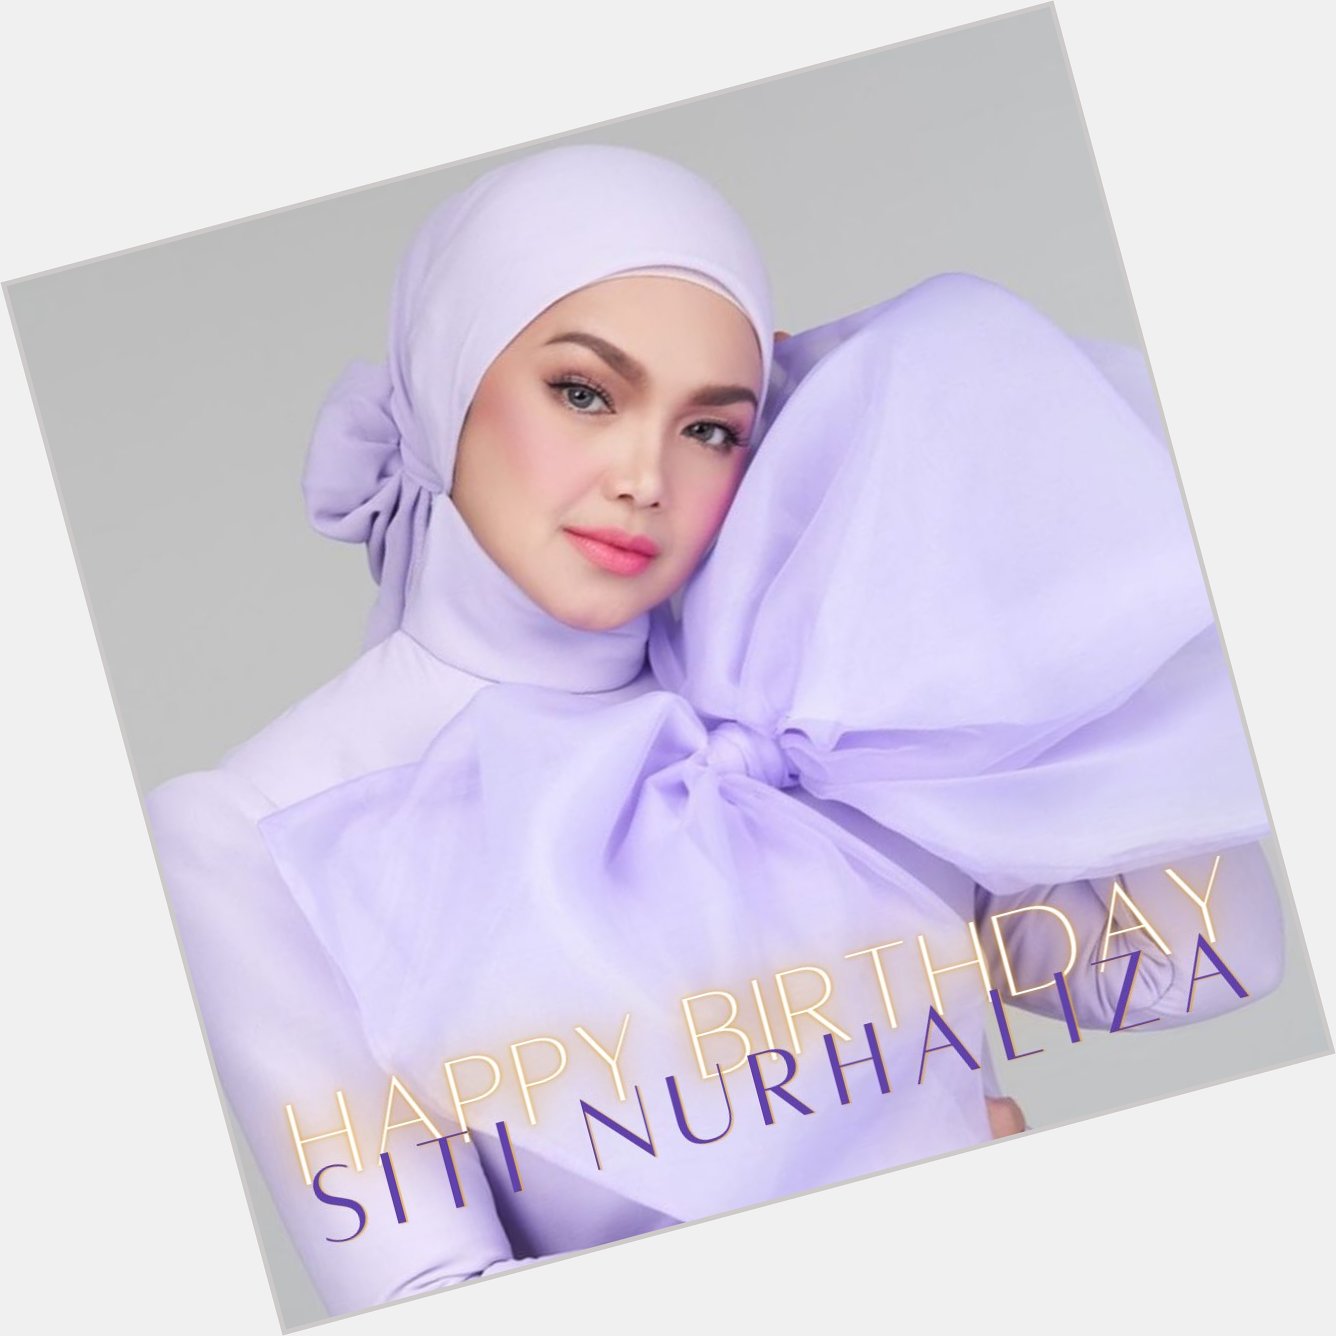  Happy birthday Siti Nurhaliza! Xoxo ZEN   